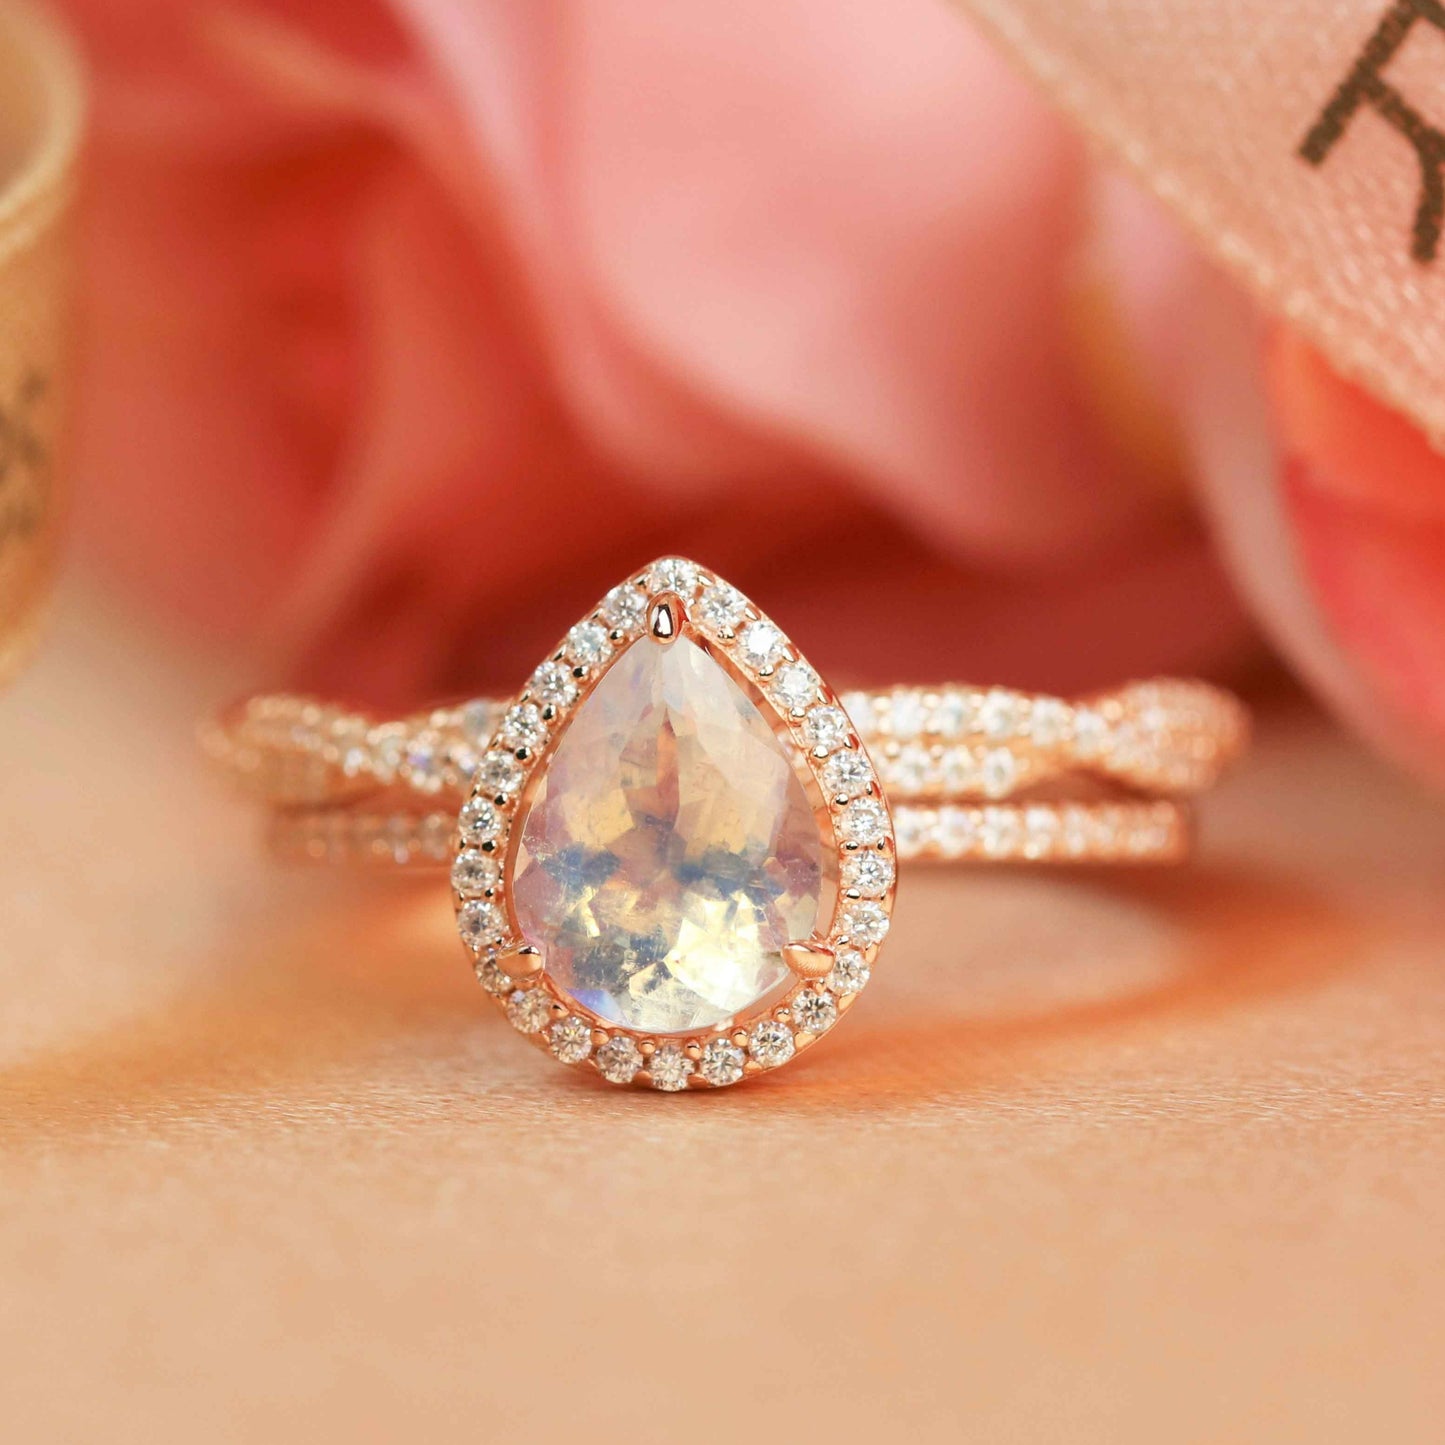 Perfect 1.75 carat rainbow Moonstone tear drop Wedding Ring Set with Matching Eternity Wedding Ring Band